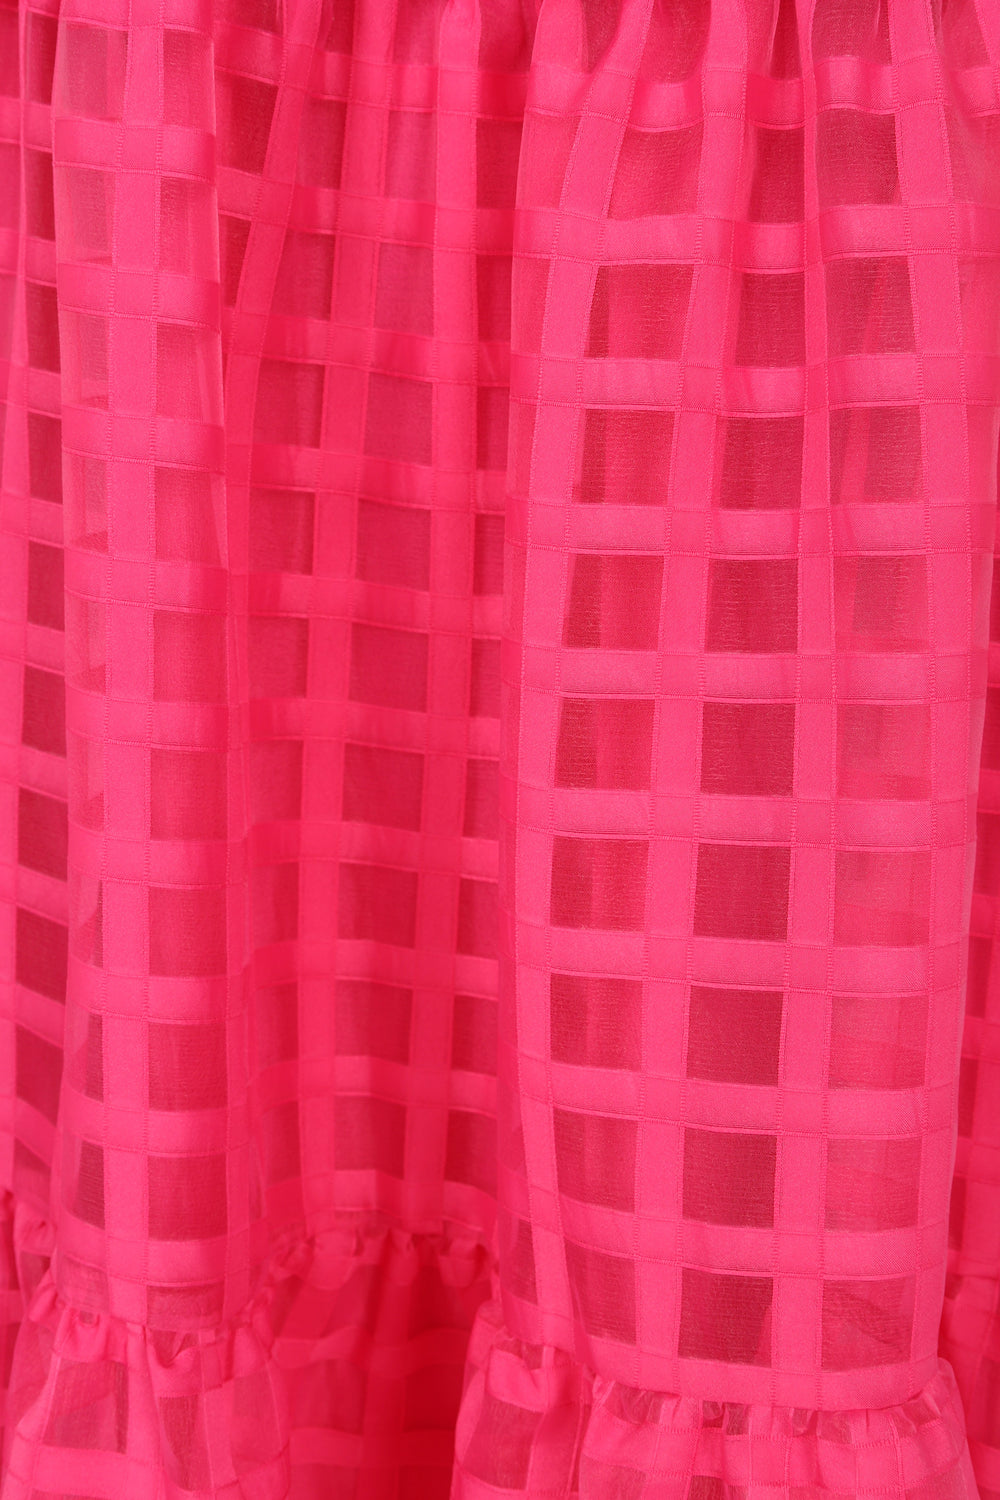 DRESSES @Calea Maxi Dress - Pink